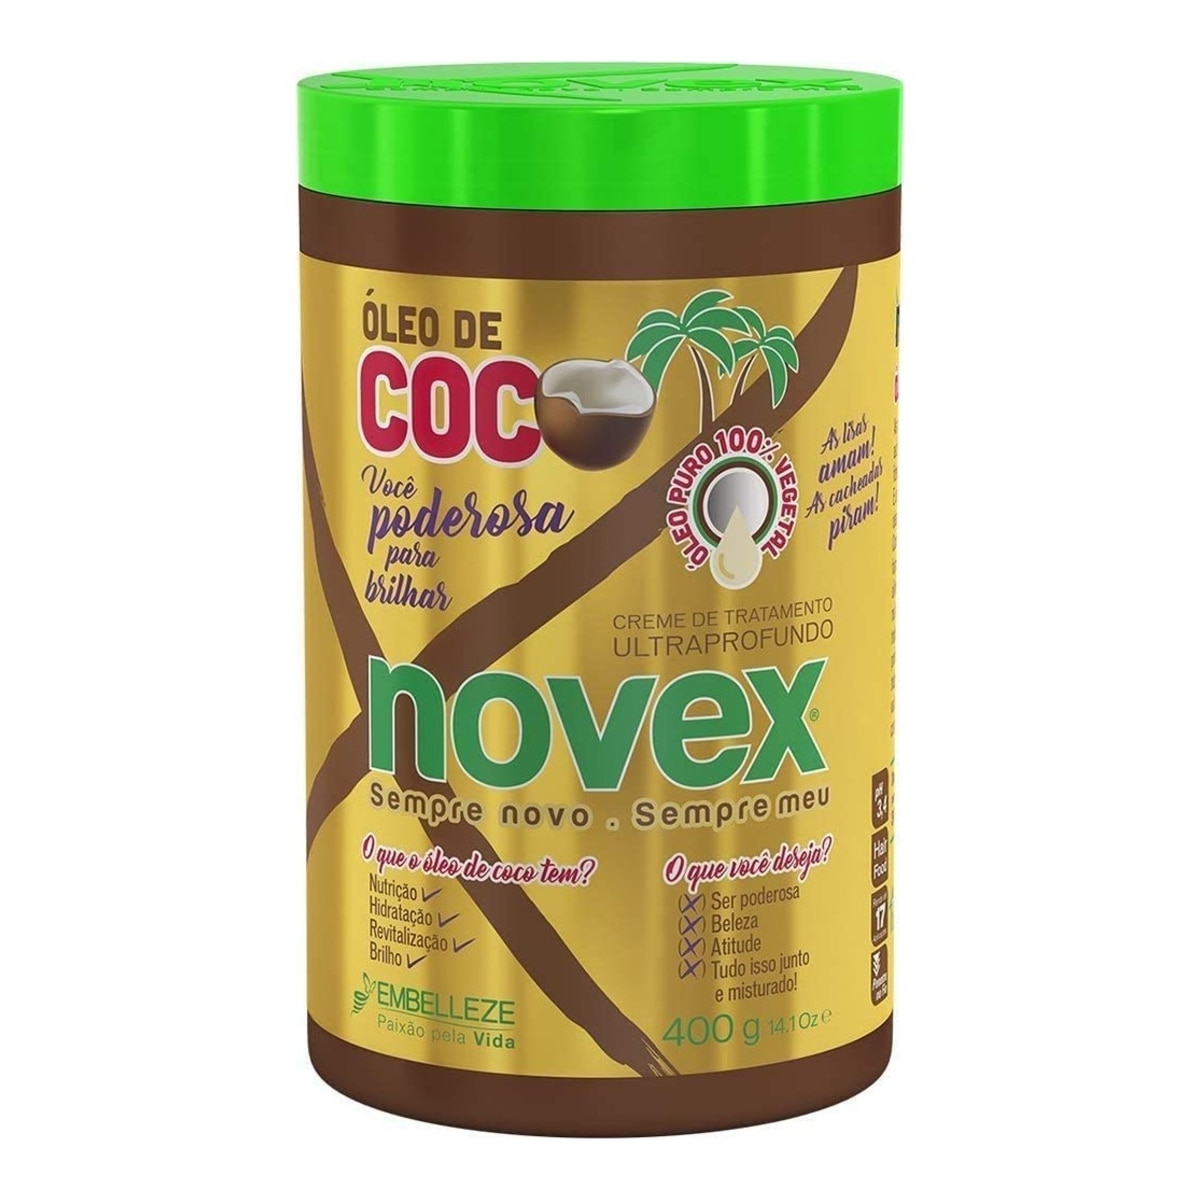 Creme de Tratamento Novex Oleo de Coco 400g